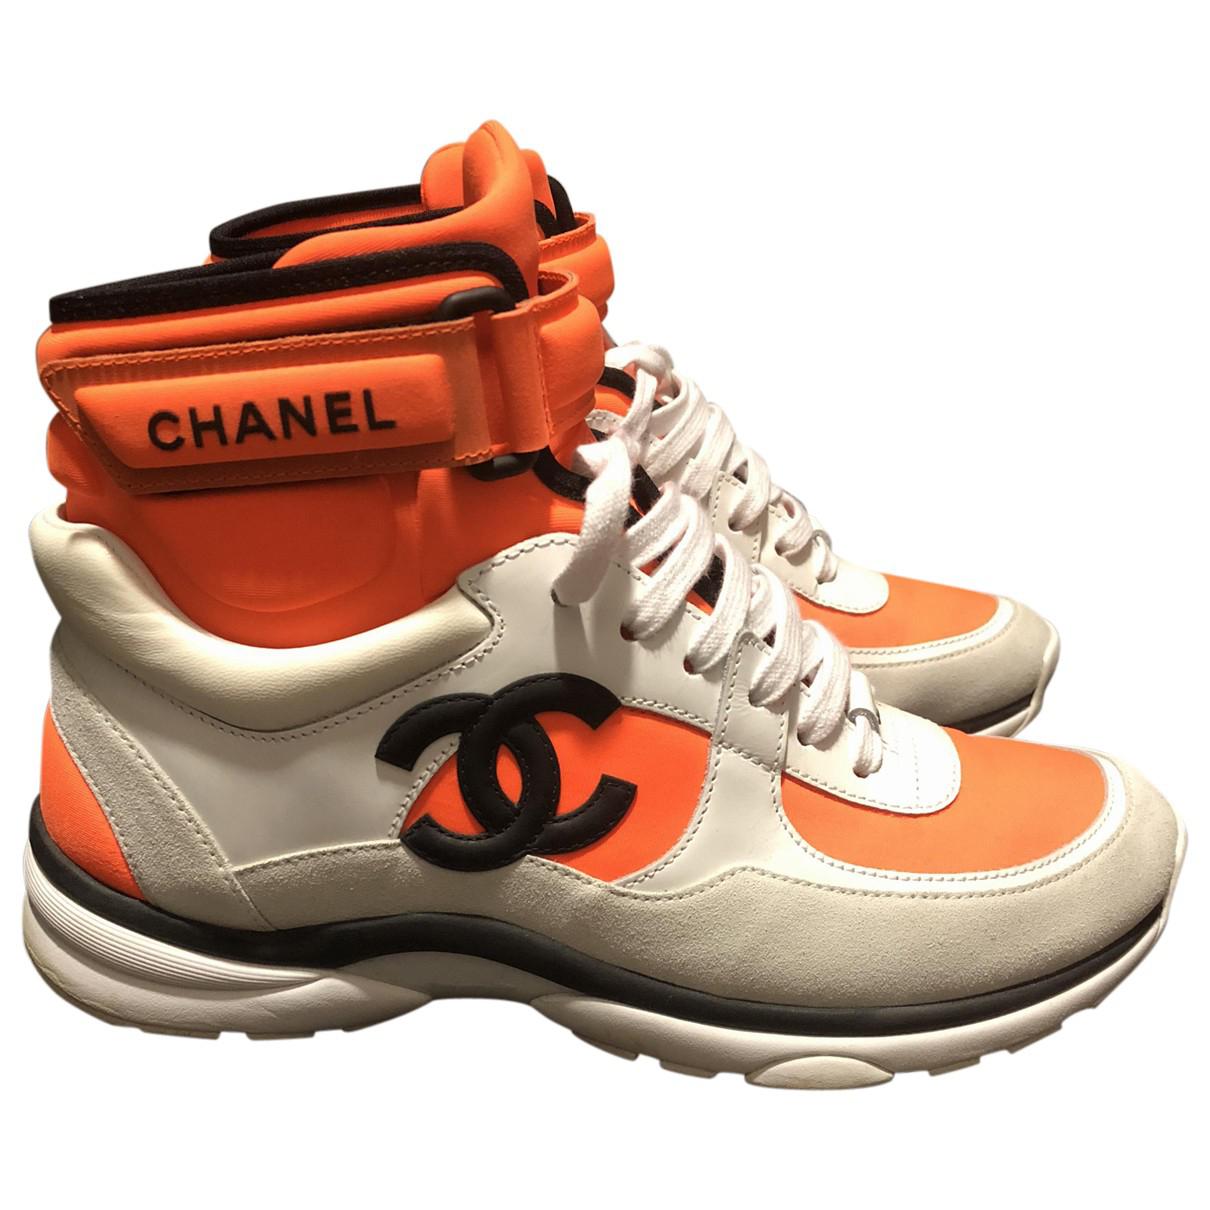 chanel trainers orange